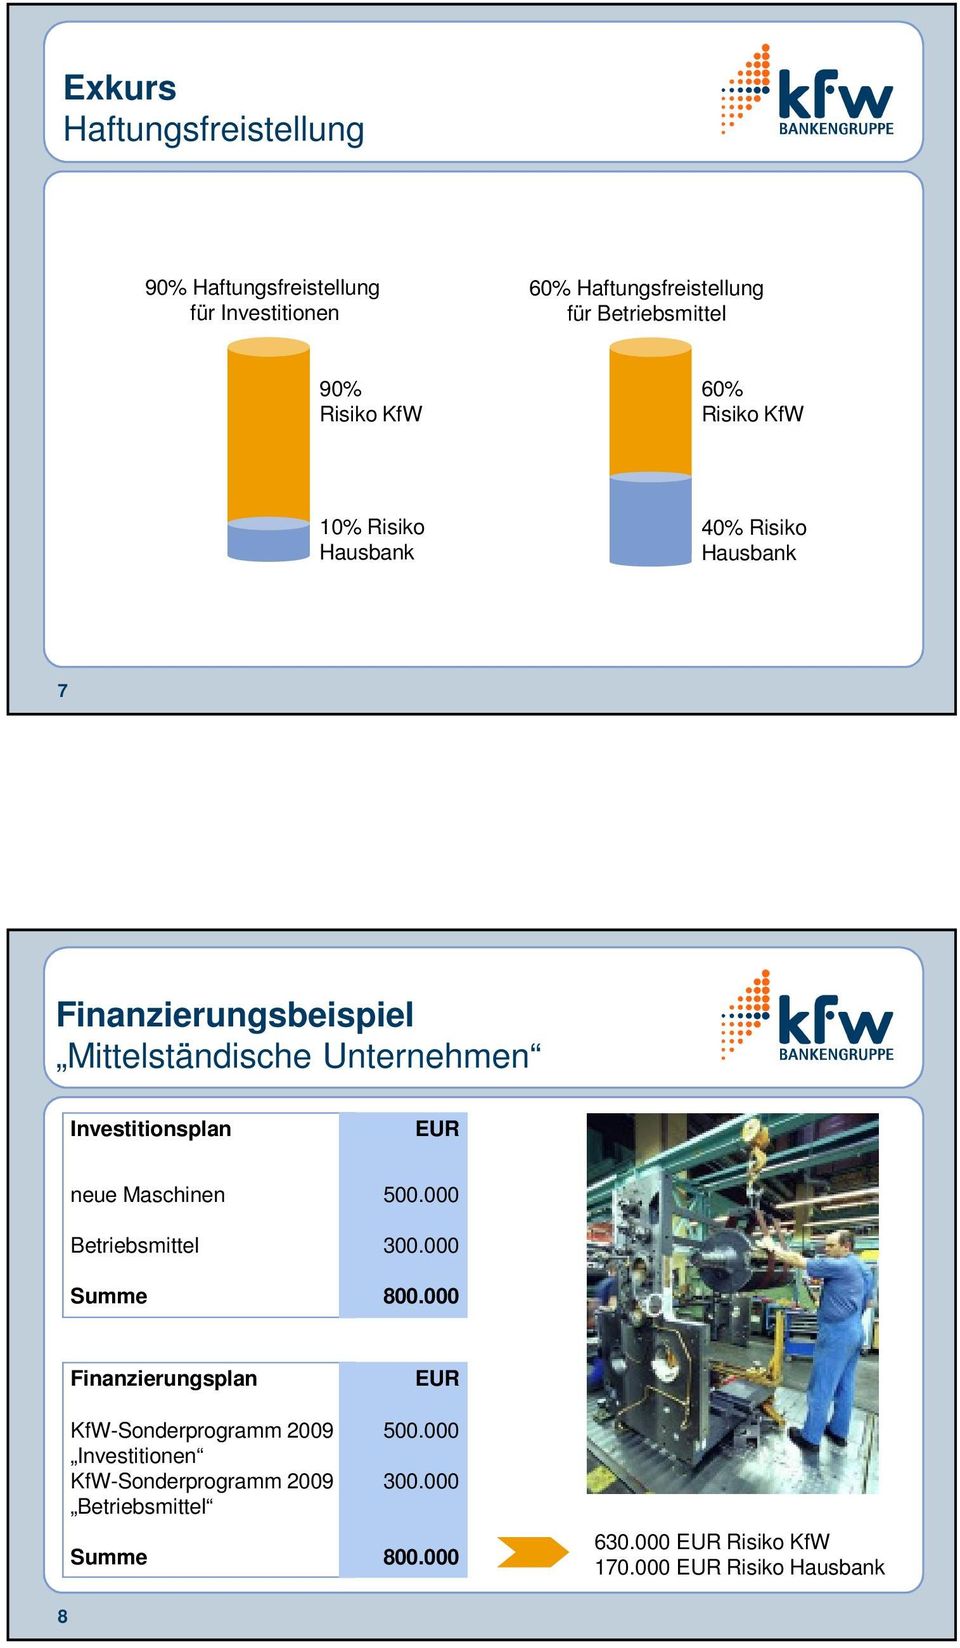 Investitionsplan EUR neue Maschinen Betriebsmittel Summe 500.000 300.000 800.